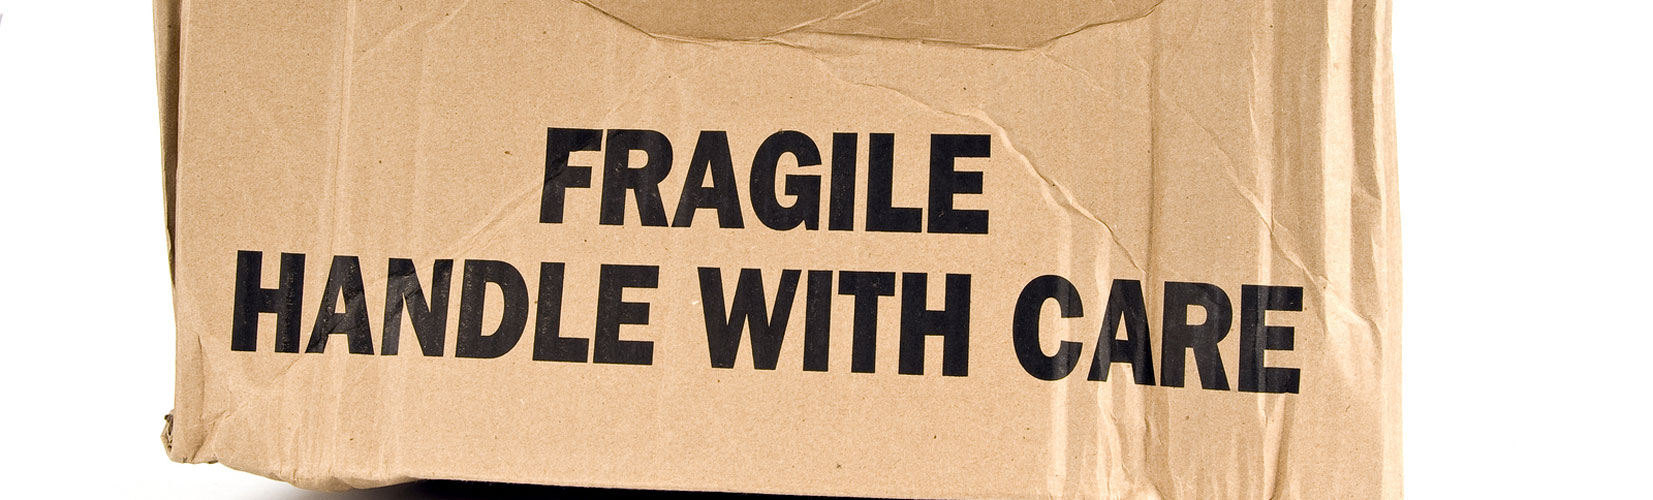 Damaged fragile brown cardboard box